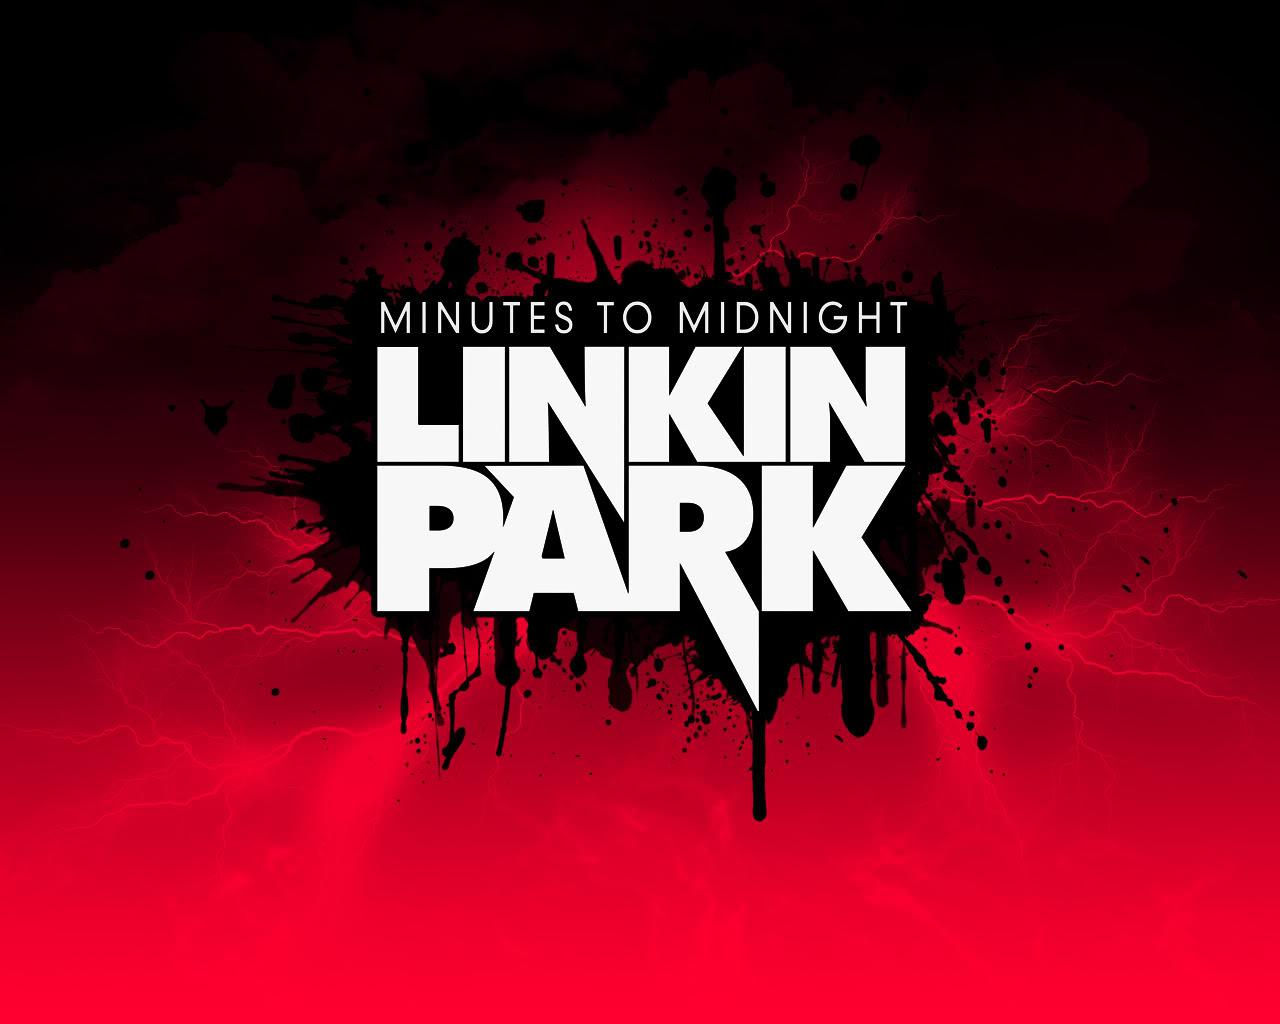 linkin park logo in red